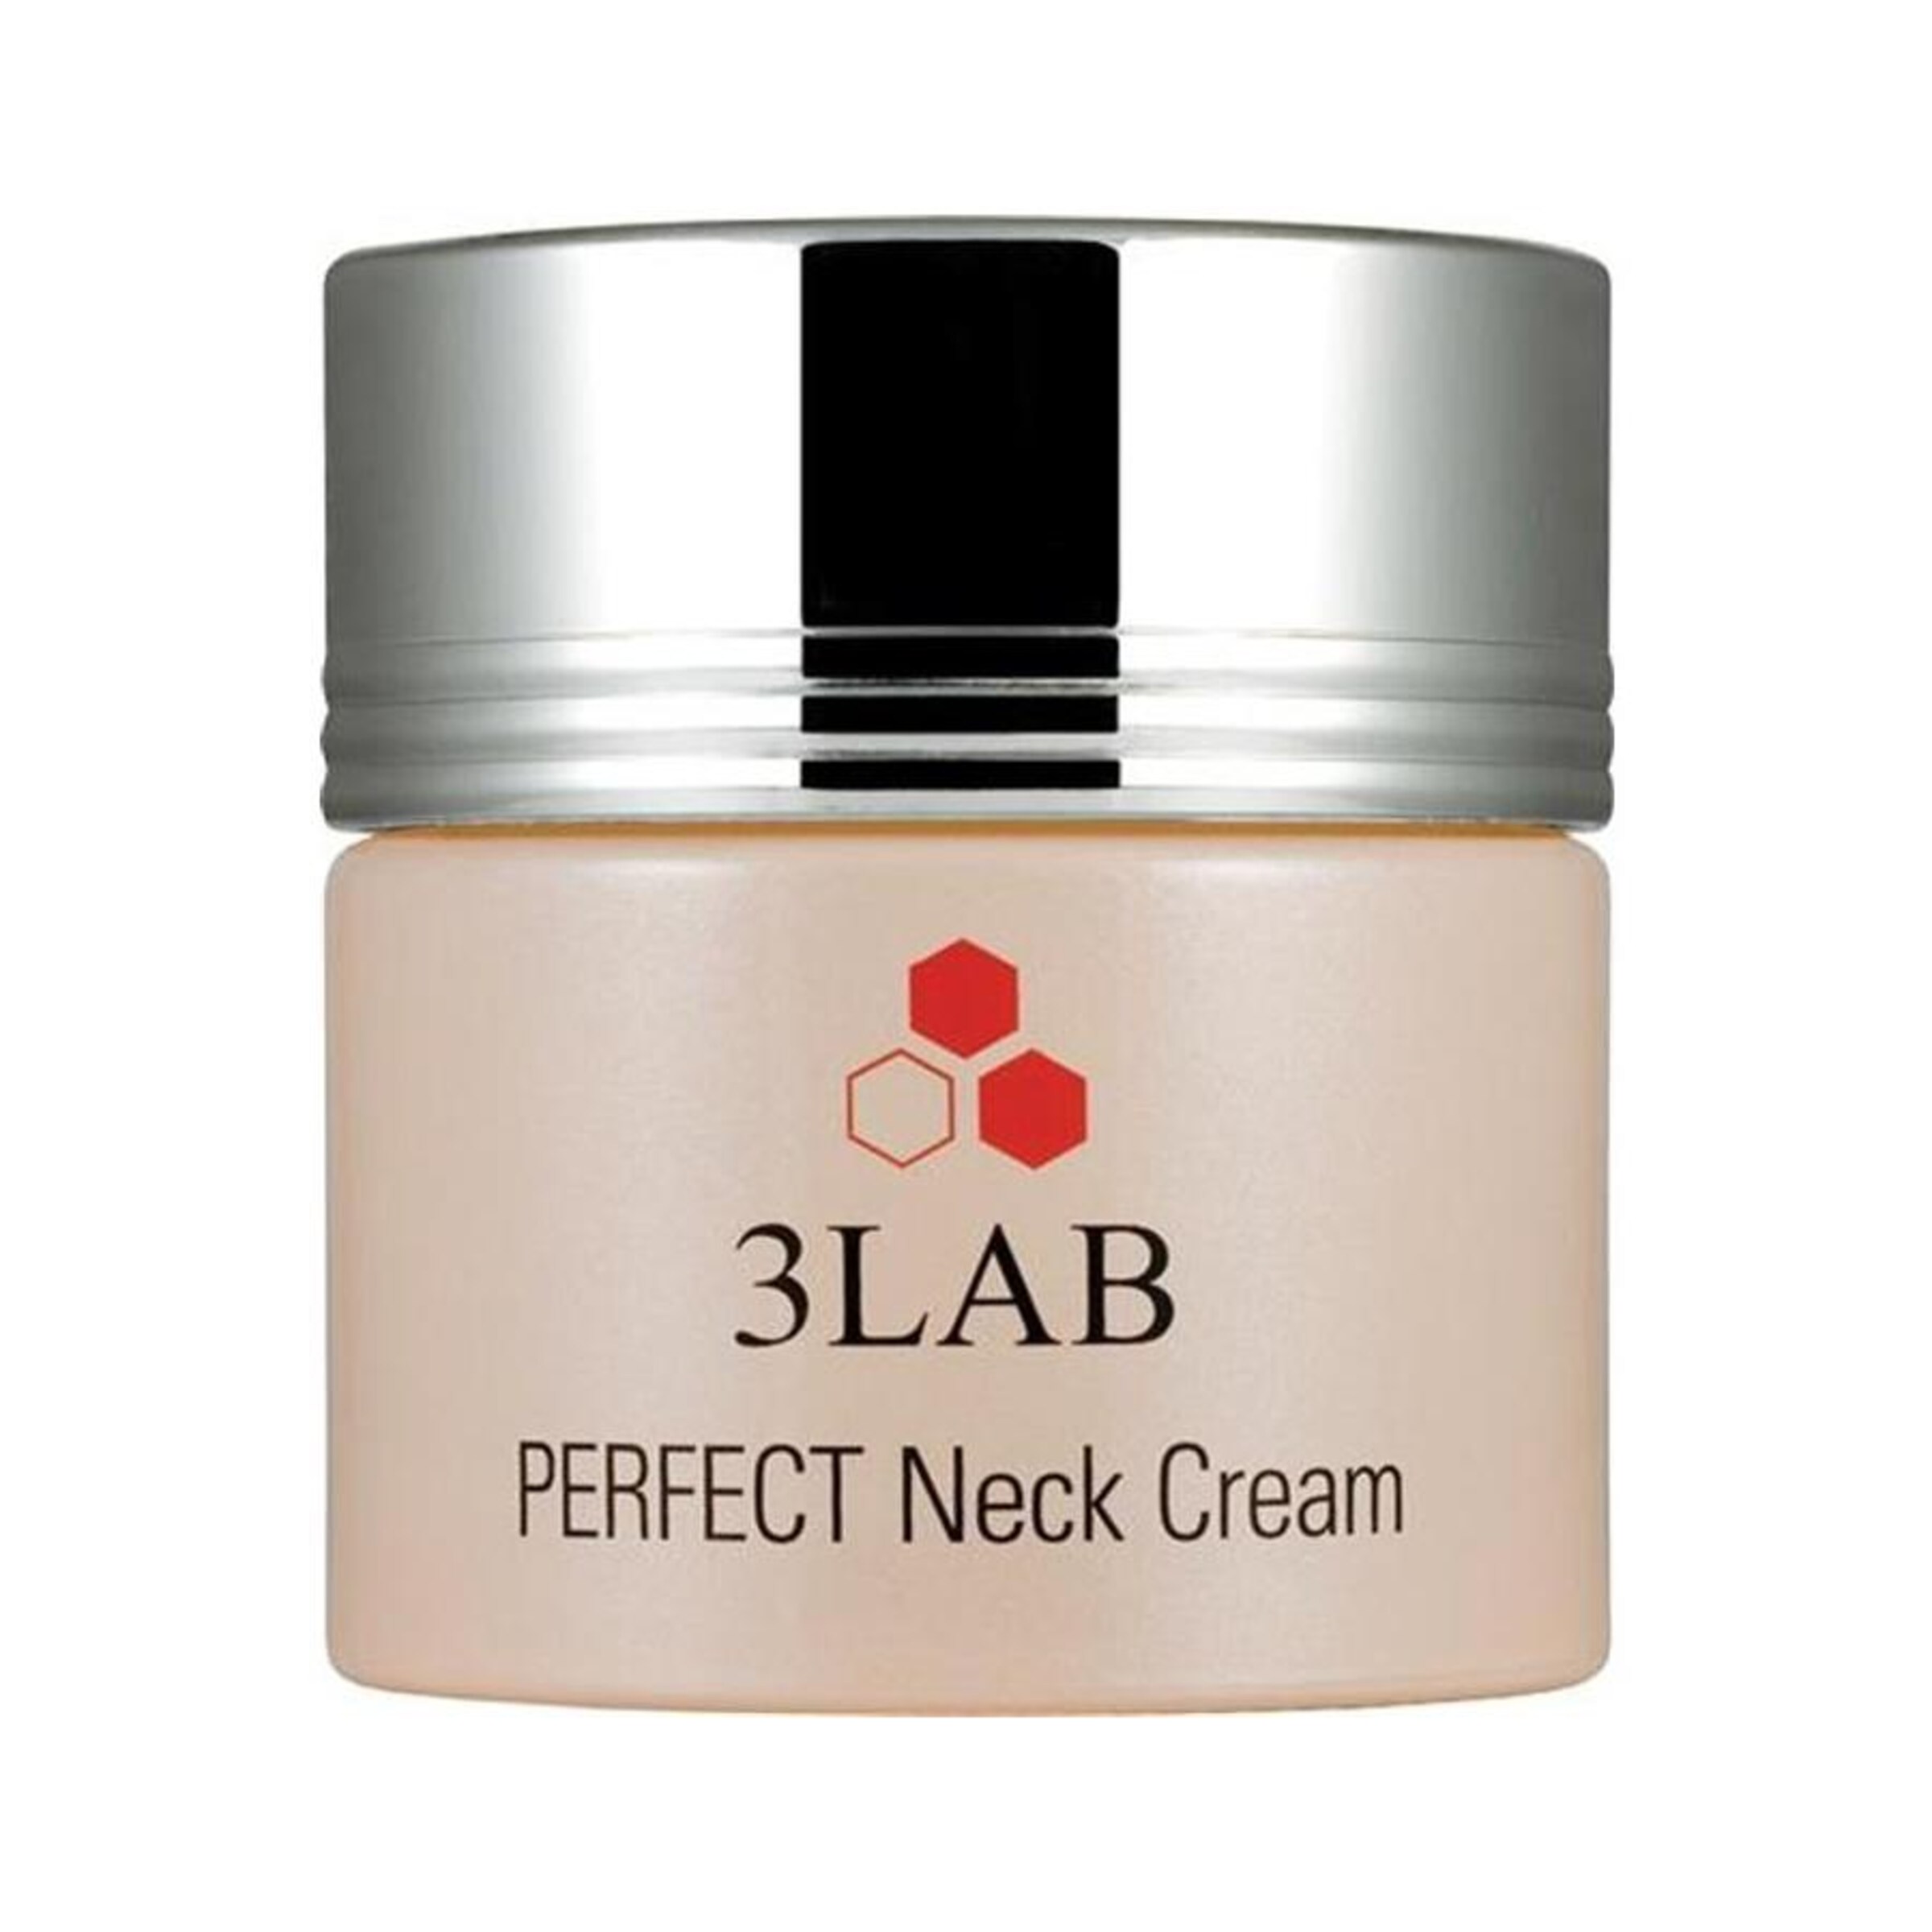 3LAB Gesichtscreme Perfect Neck Cream in 